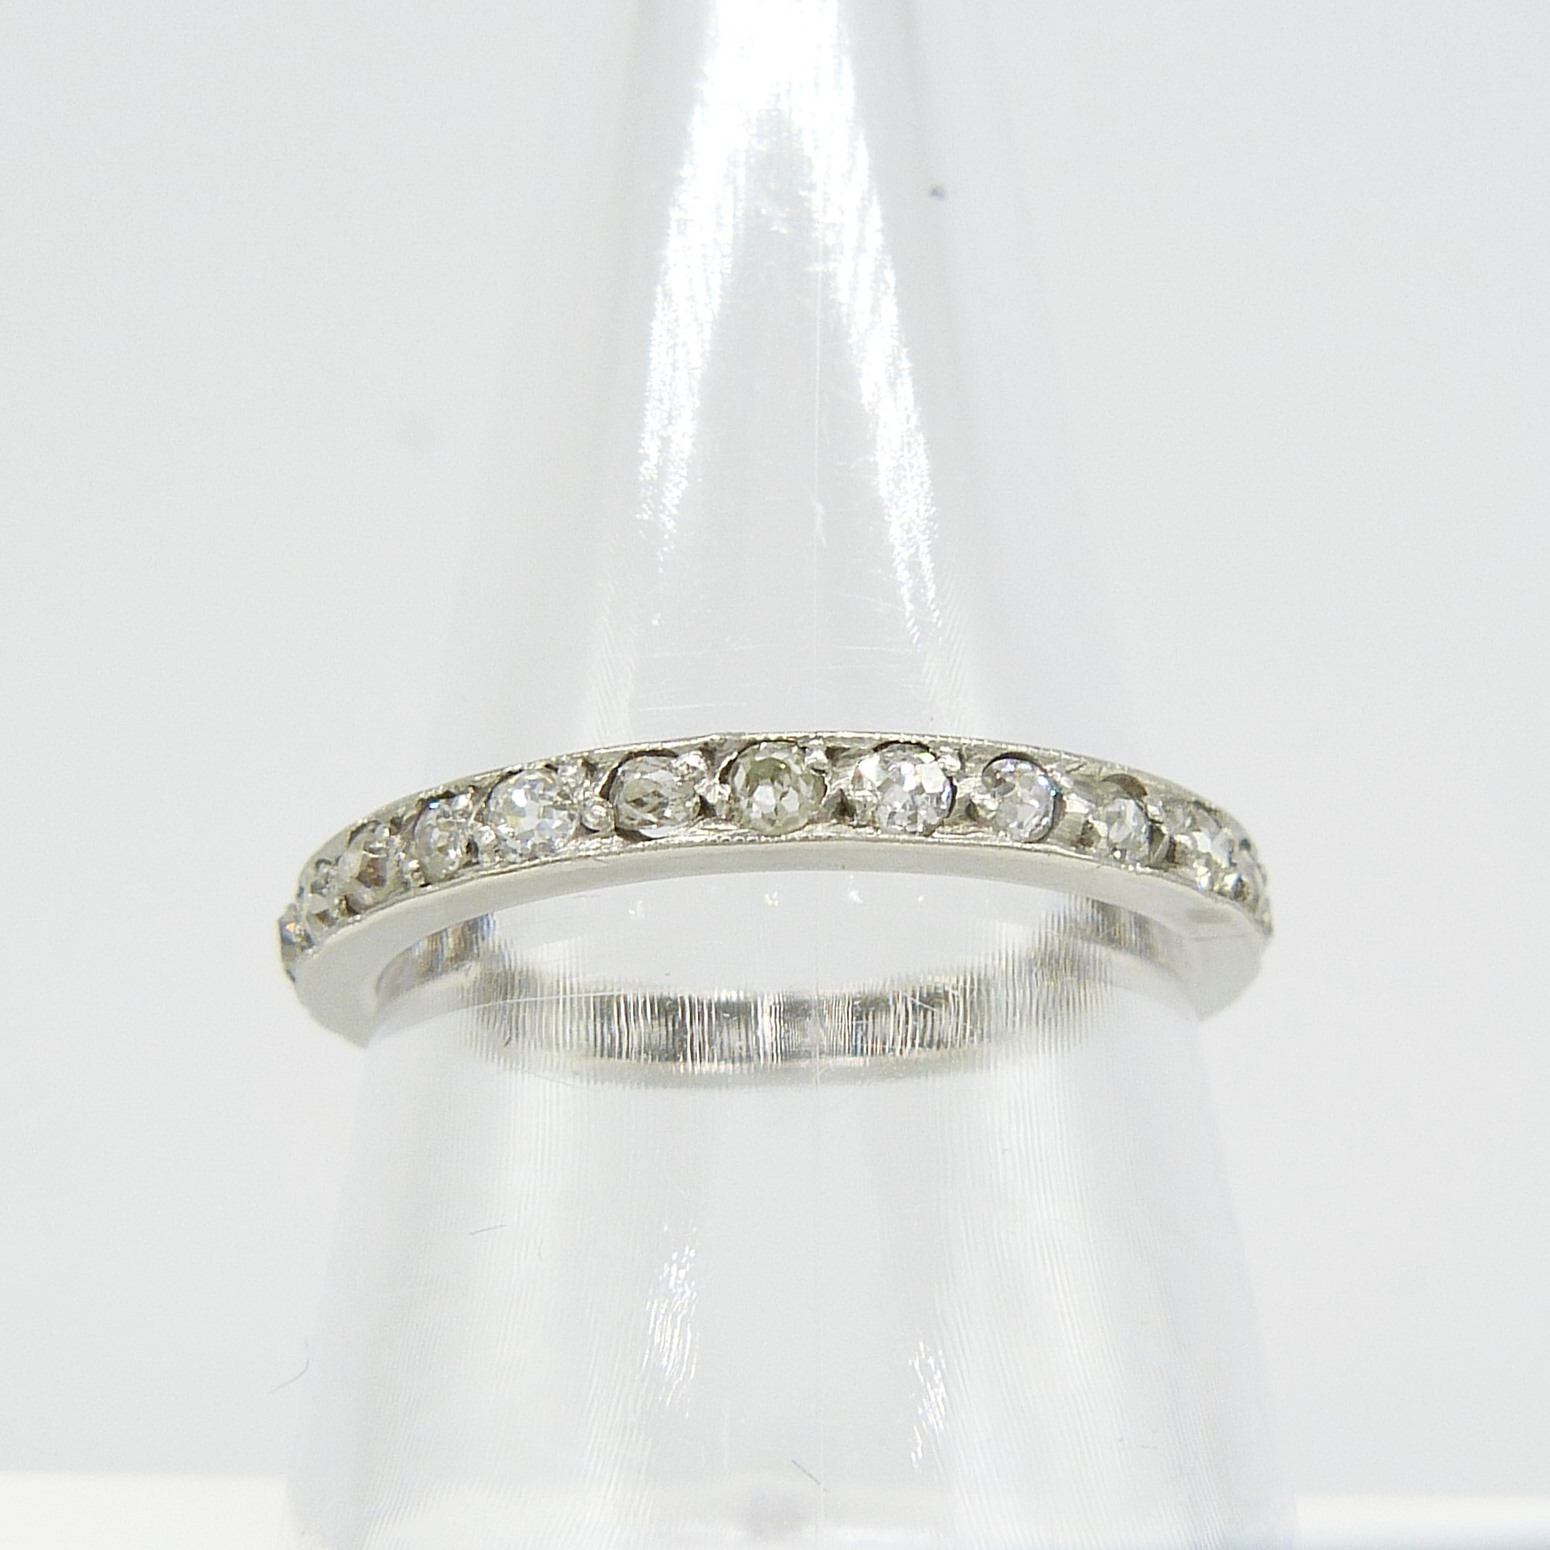 Genuine antique platinum full eternity ring set with 0.85 carats old-cut diamonds - Image 4 of 8